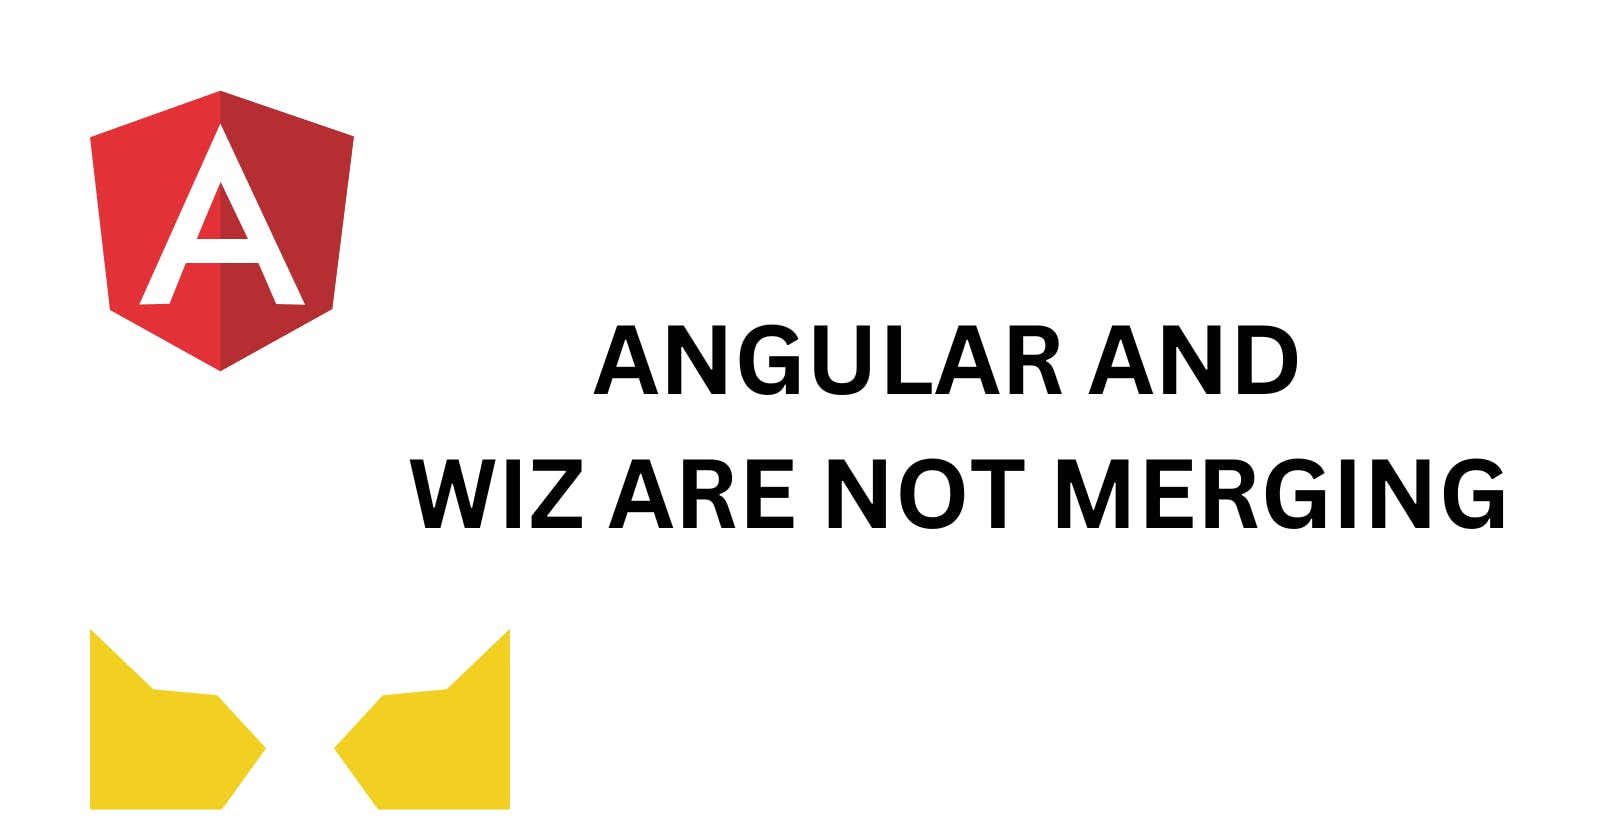 Angular and Wiz are not merging.